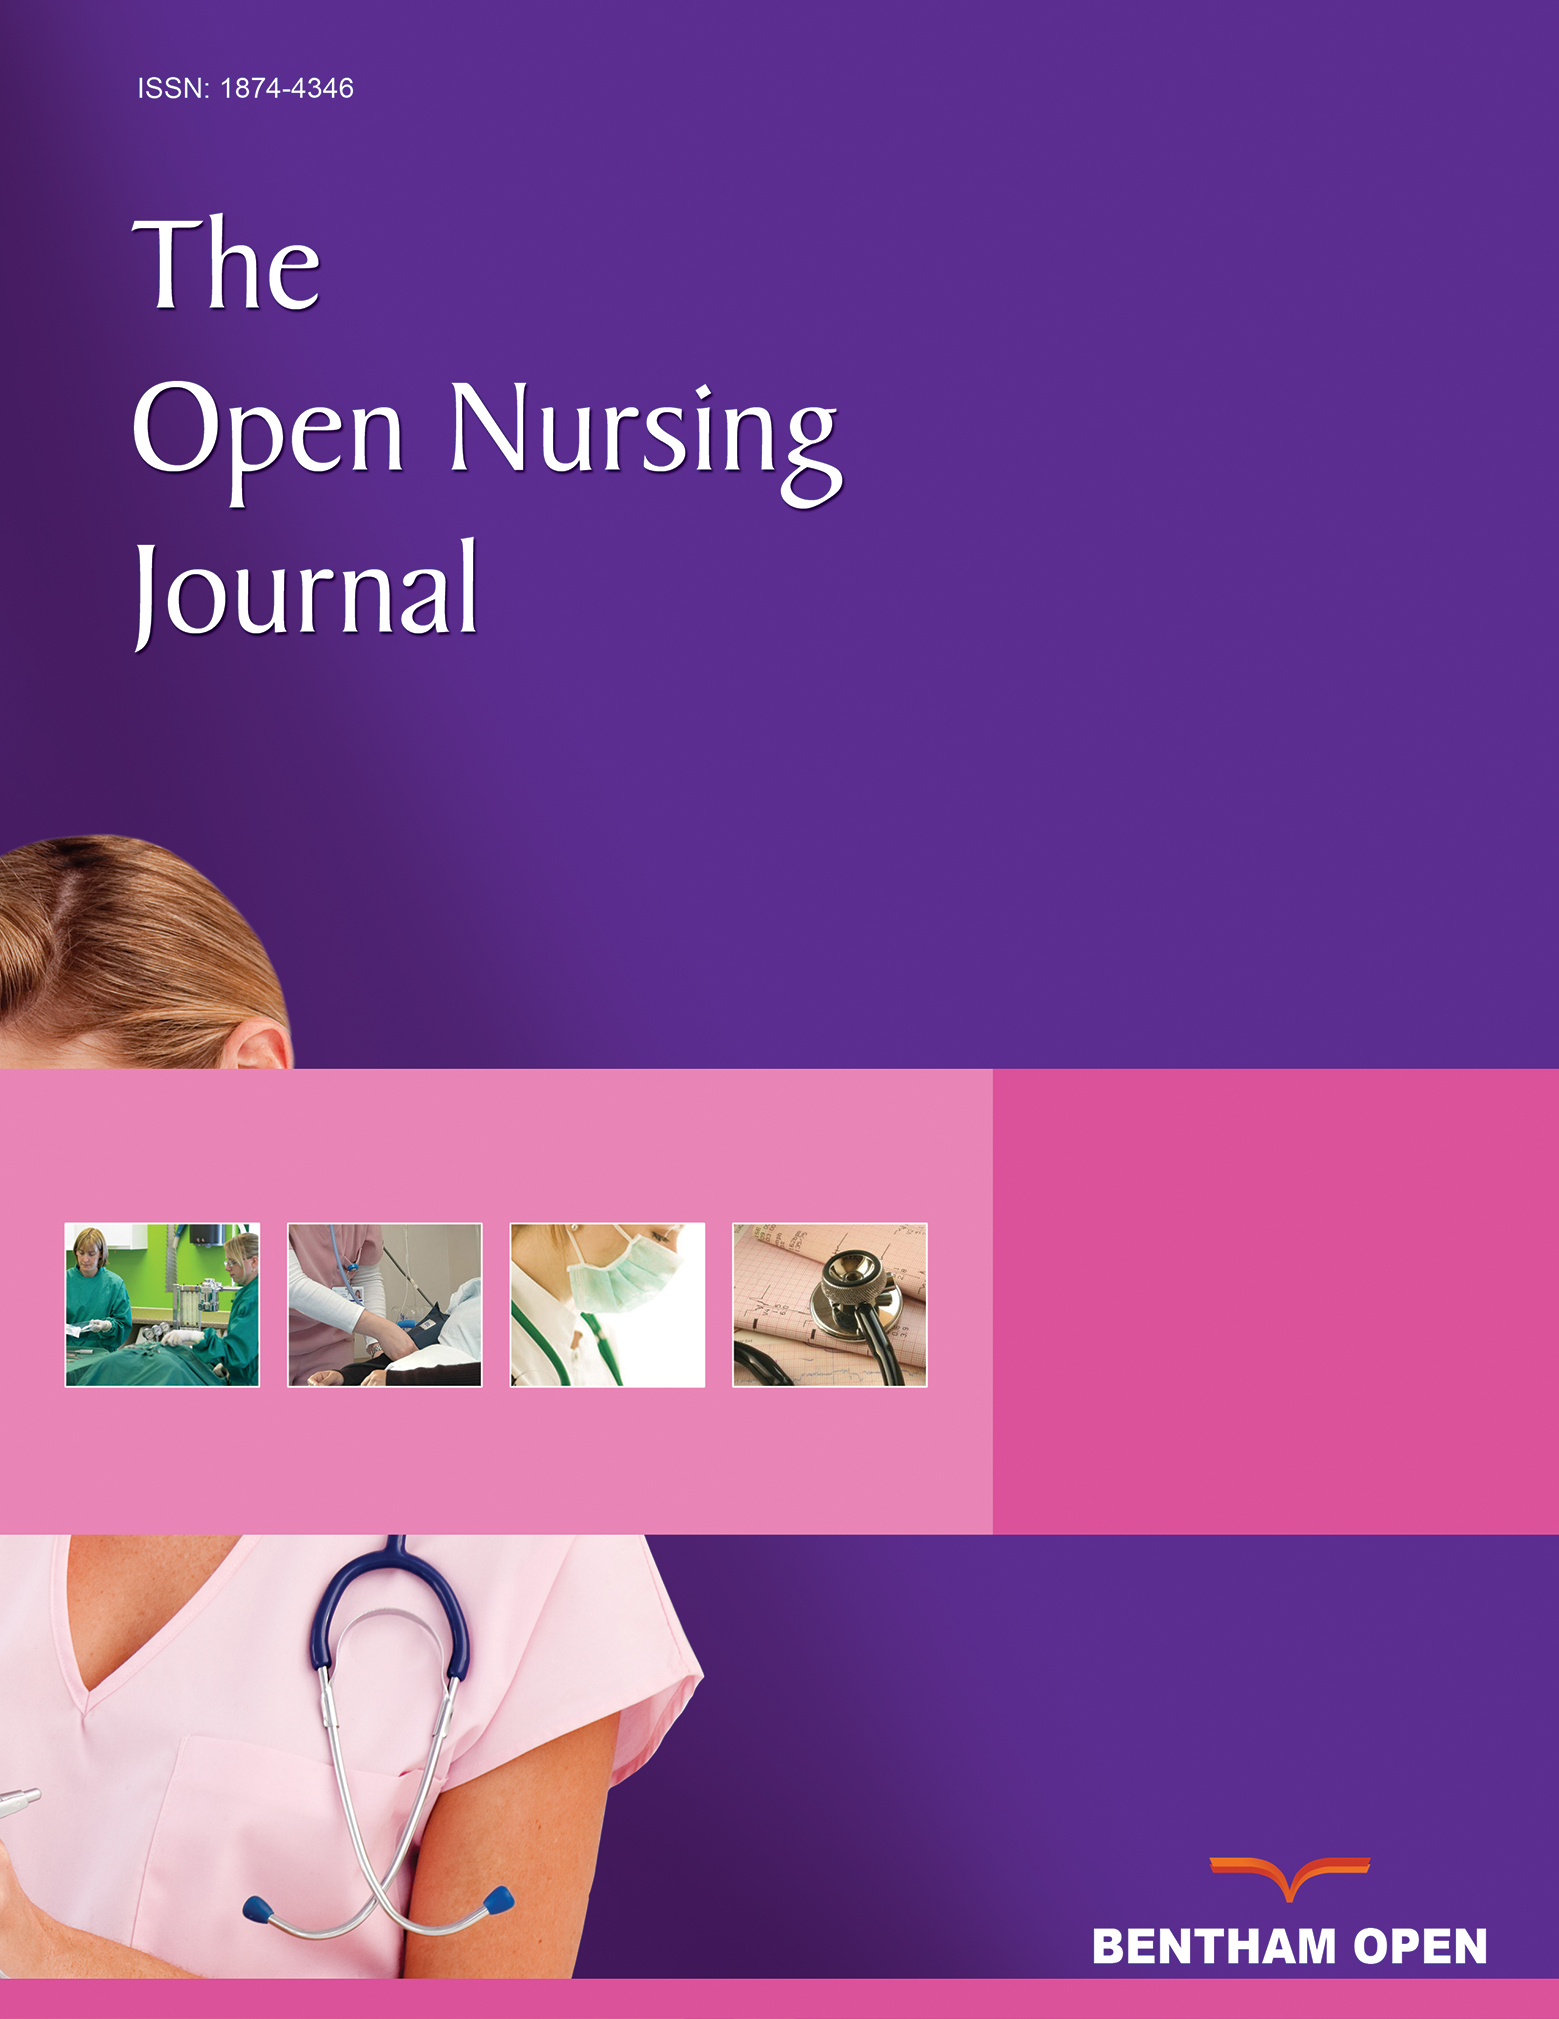 The Open Nursing Journal